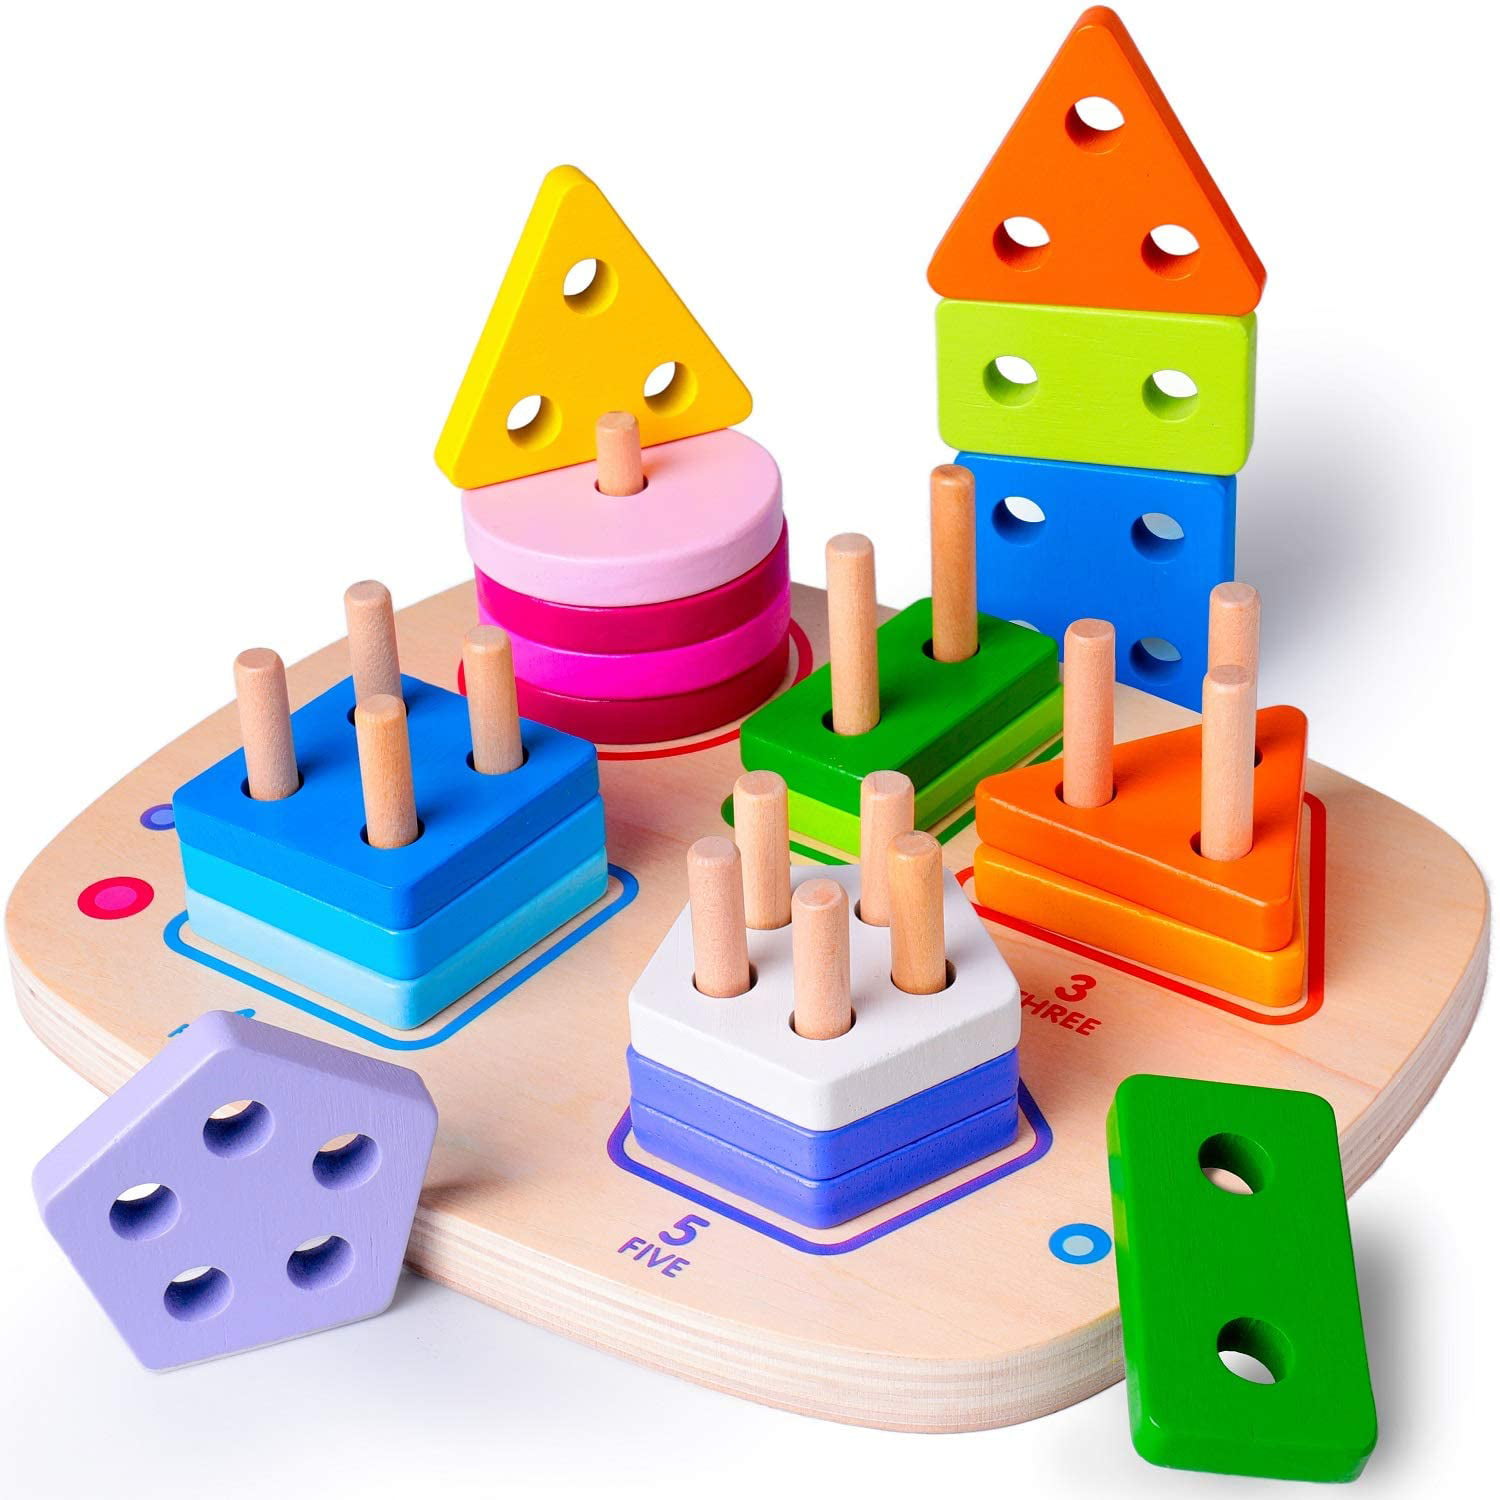 Kids Blue Wooden Geometric Sorting Toy Set for Preschool Children Toddler 